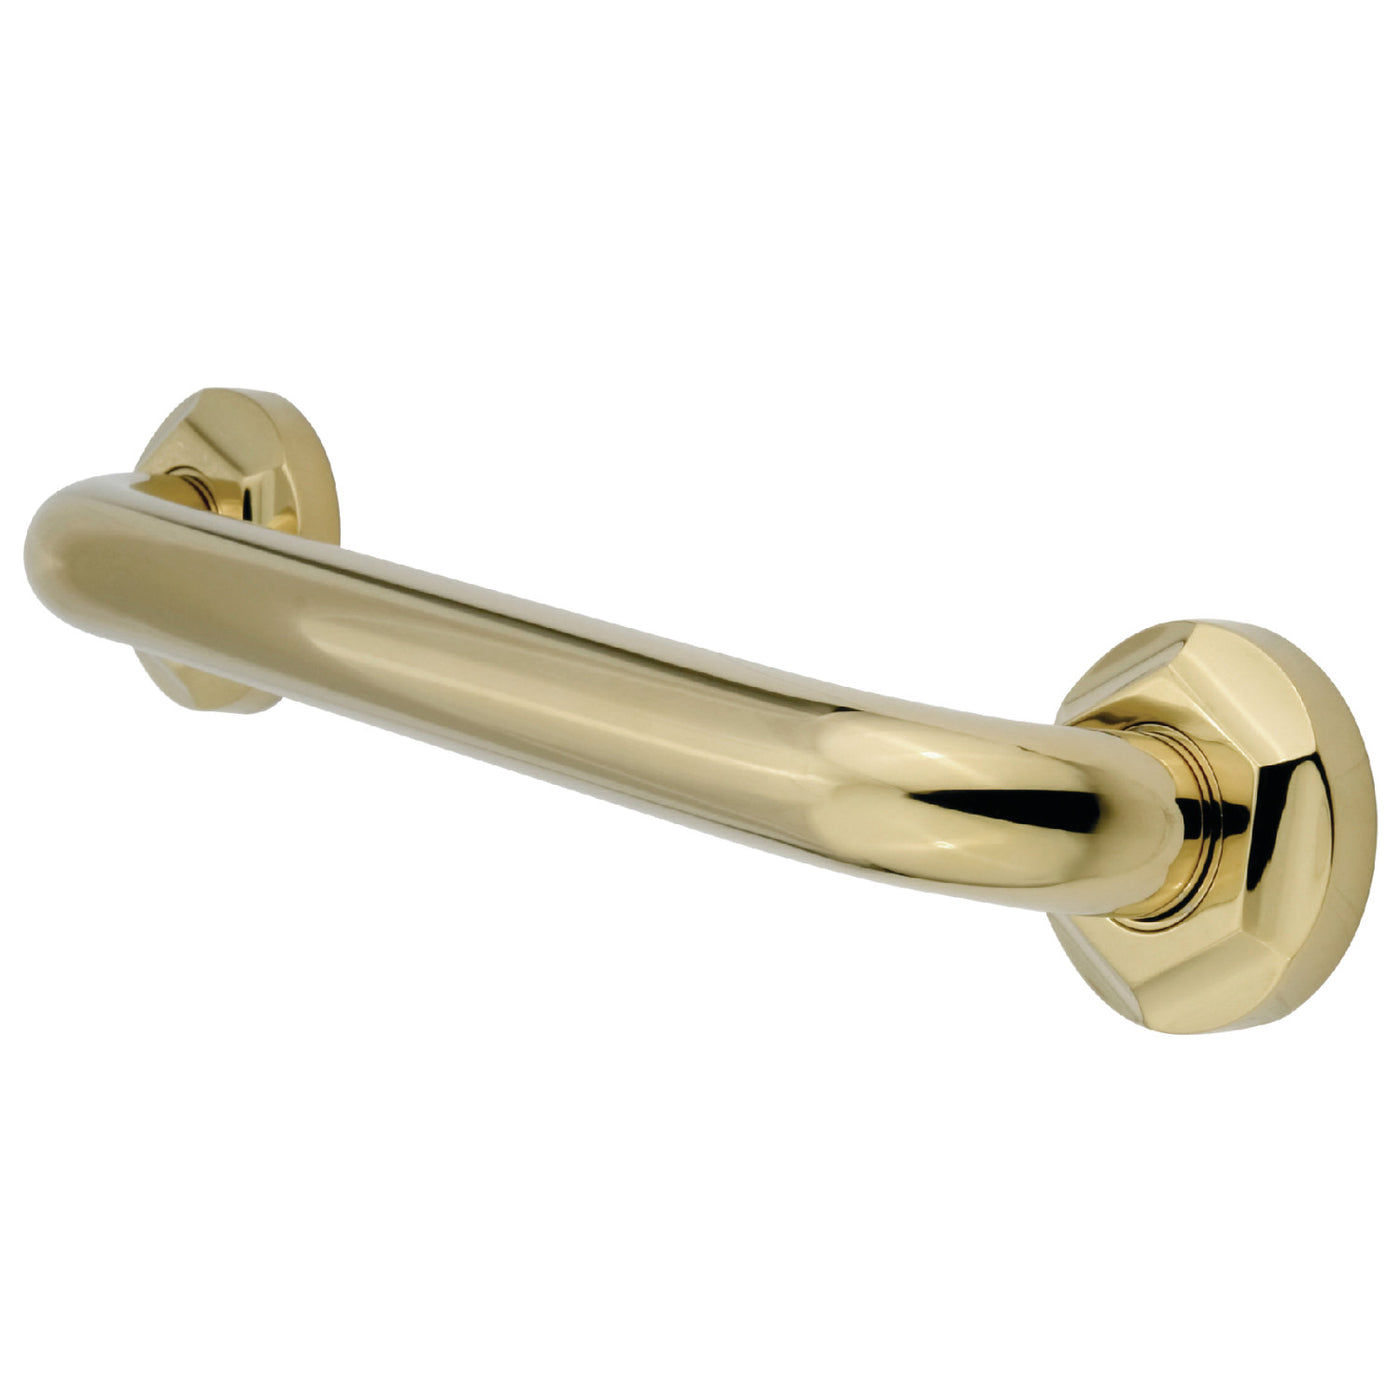 Elements of Design EDR714242 24-Inch x 1-1/4-Inch O.D Grab Bar, Polished Brass